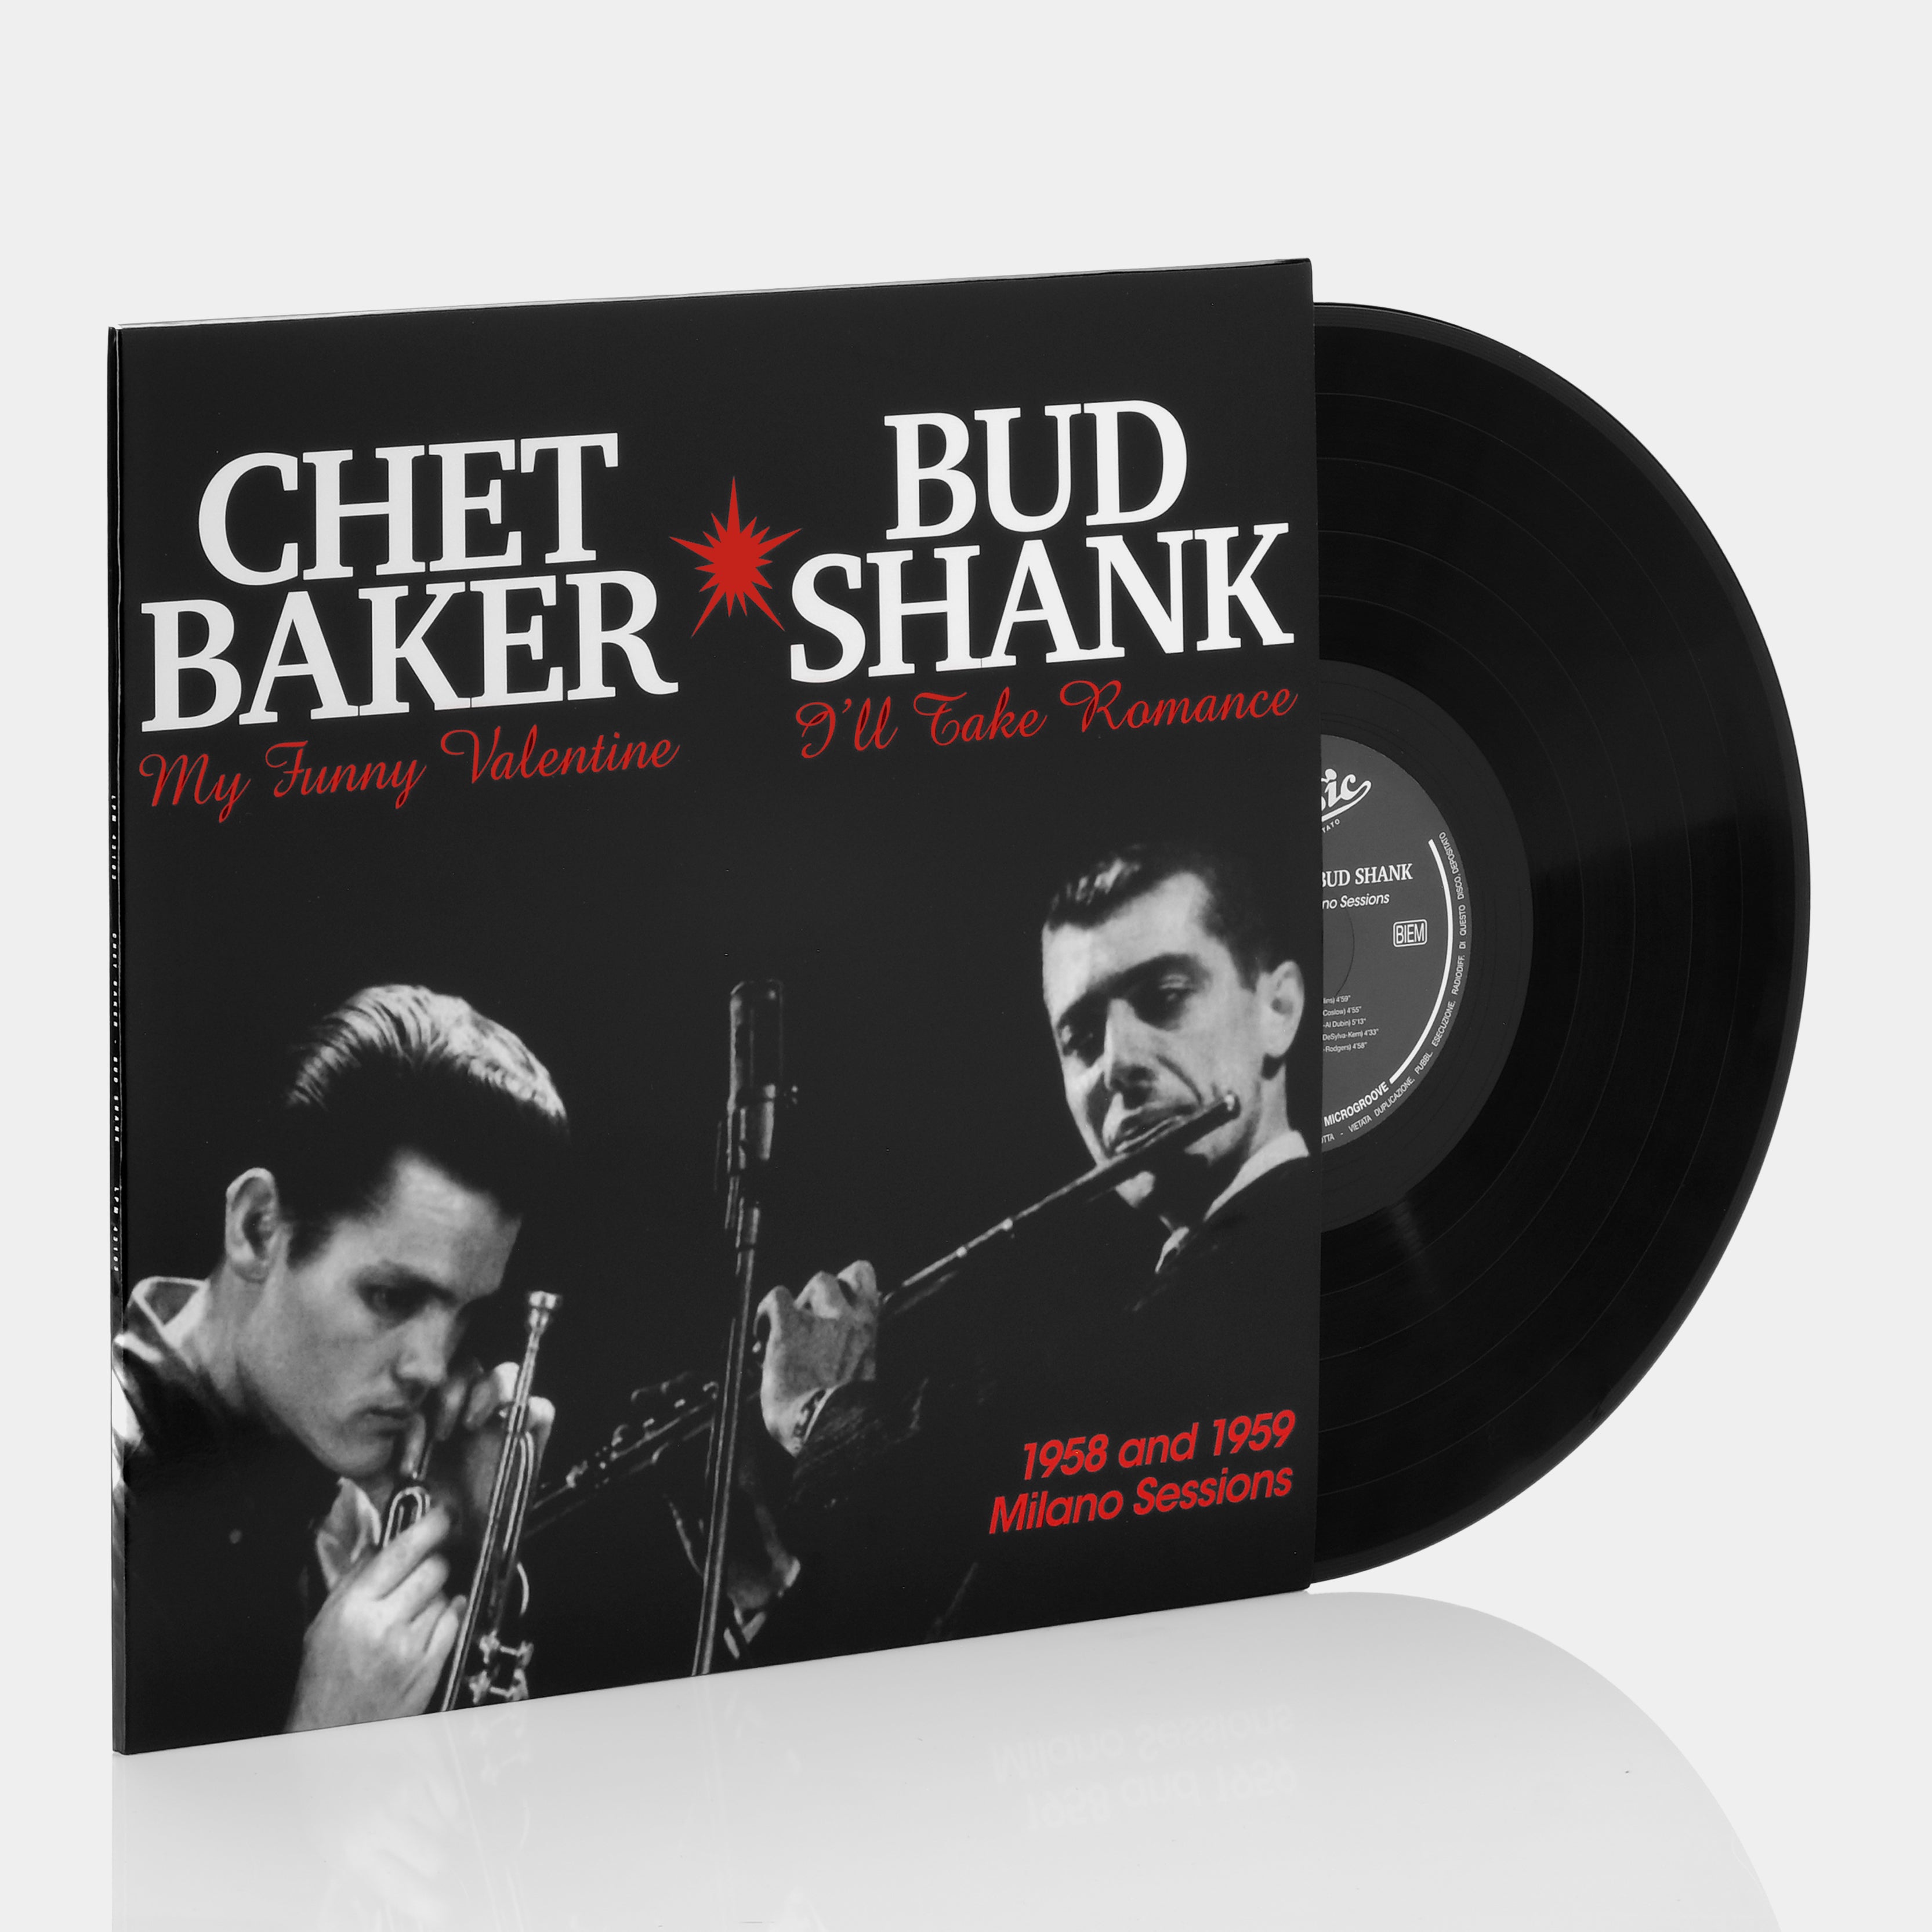 Chet Baker, Bud Shank - 1958 And 1959 Milano Sessions LP Vinyl Record